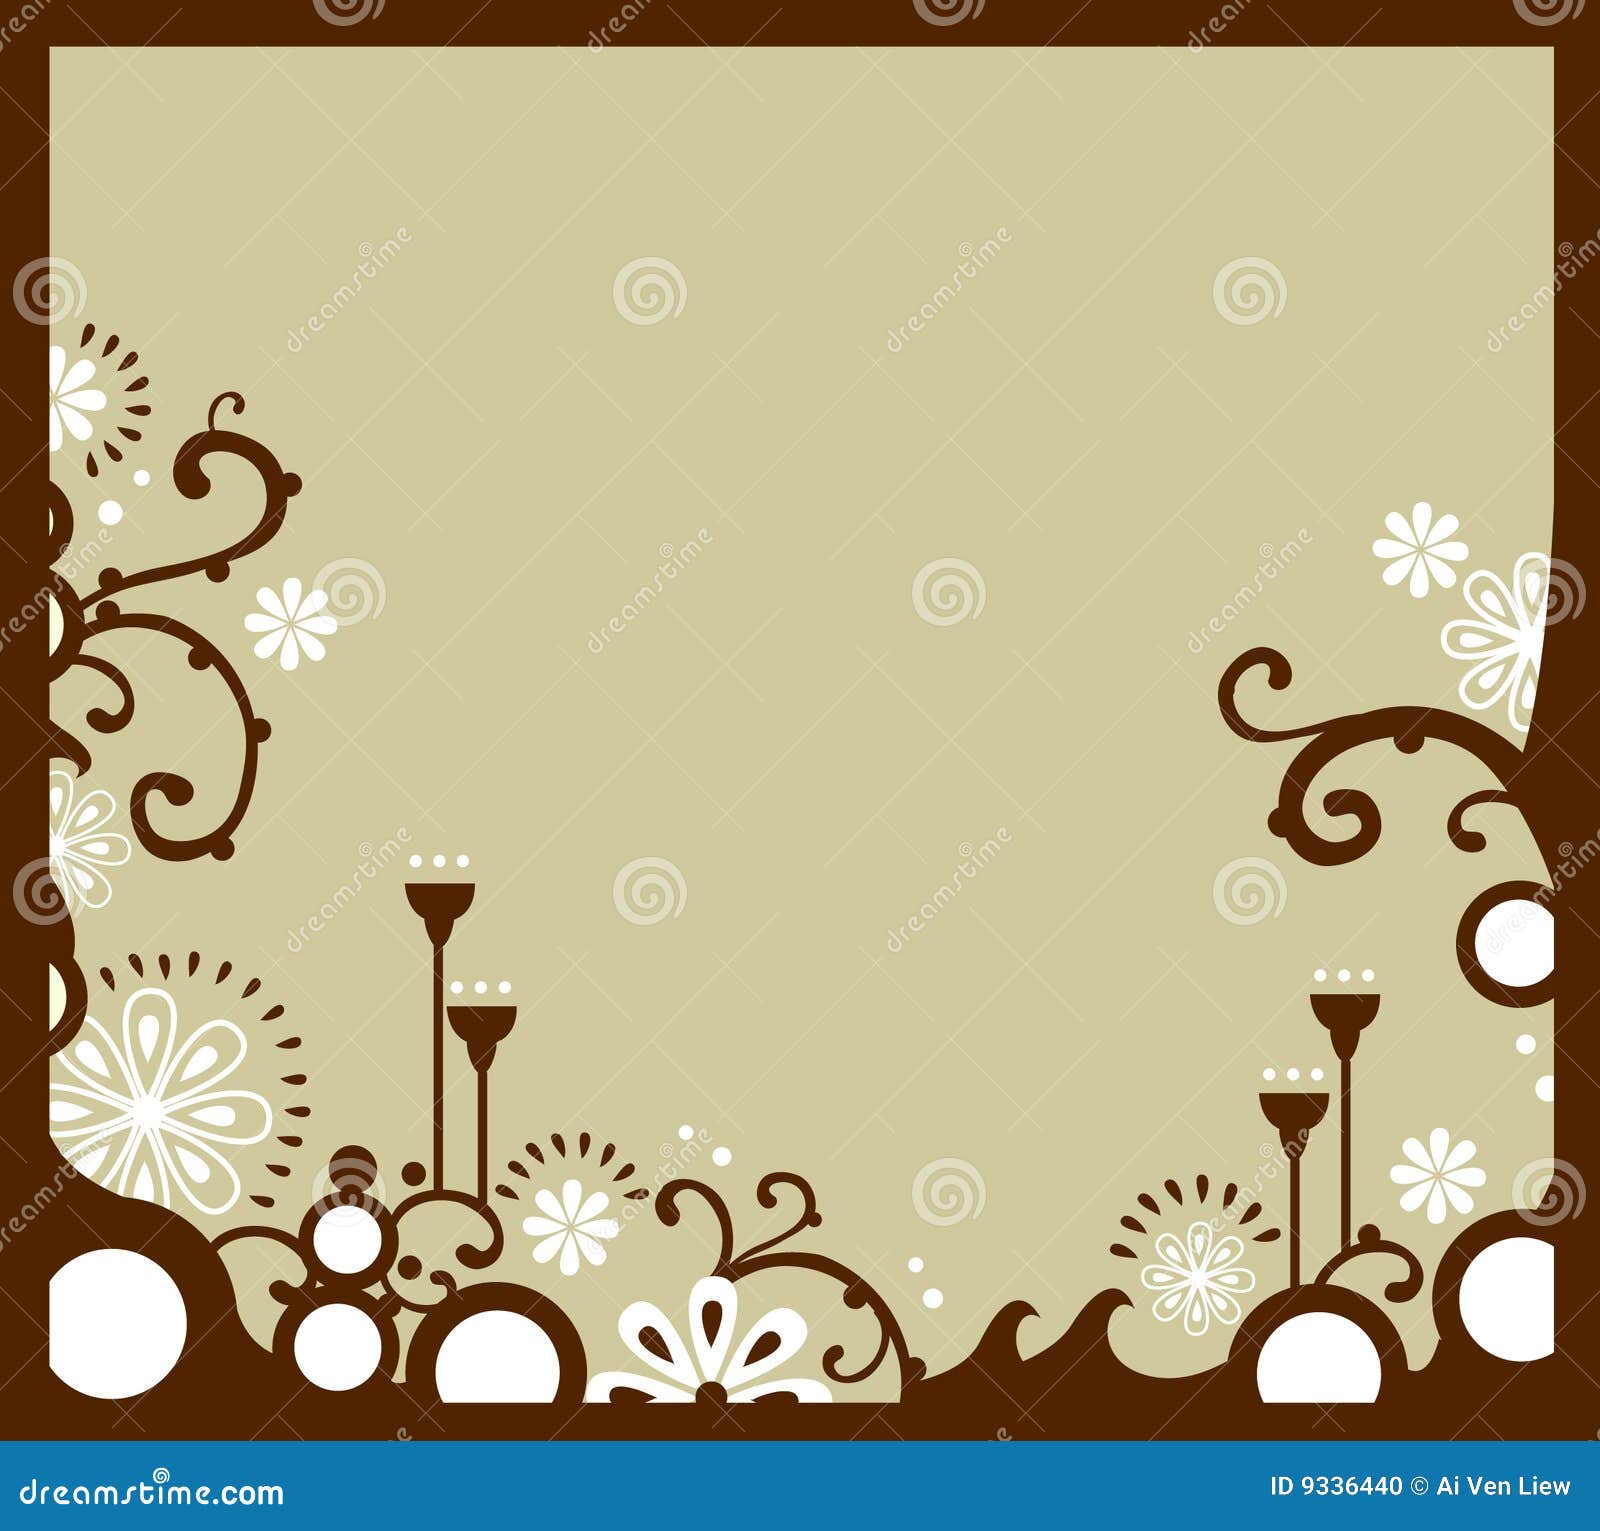 White floral border stock vector. Illustration of decorative - 9336440